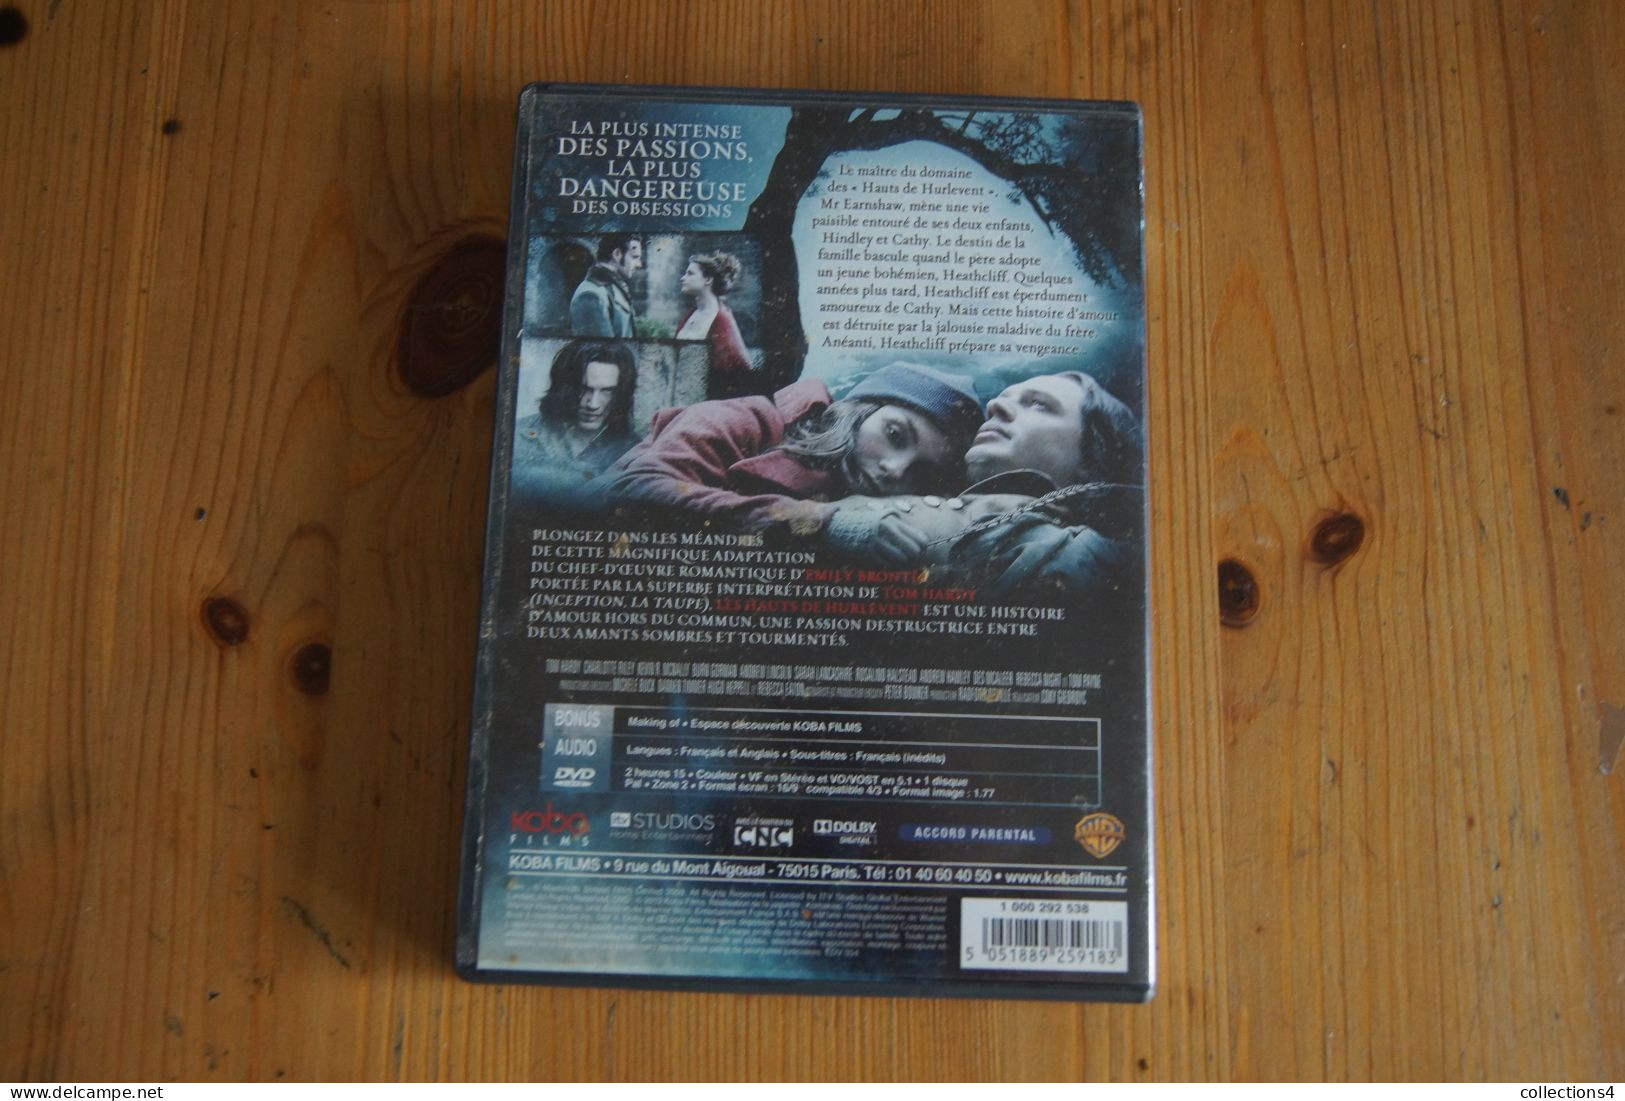 LES HAUTS DE HURLEVENT TOM HARDY CHARLOTTE RILEY DVD EMILY BRONTE TELE FILM DE 2009 - Drama